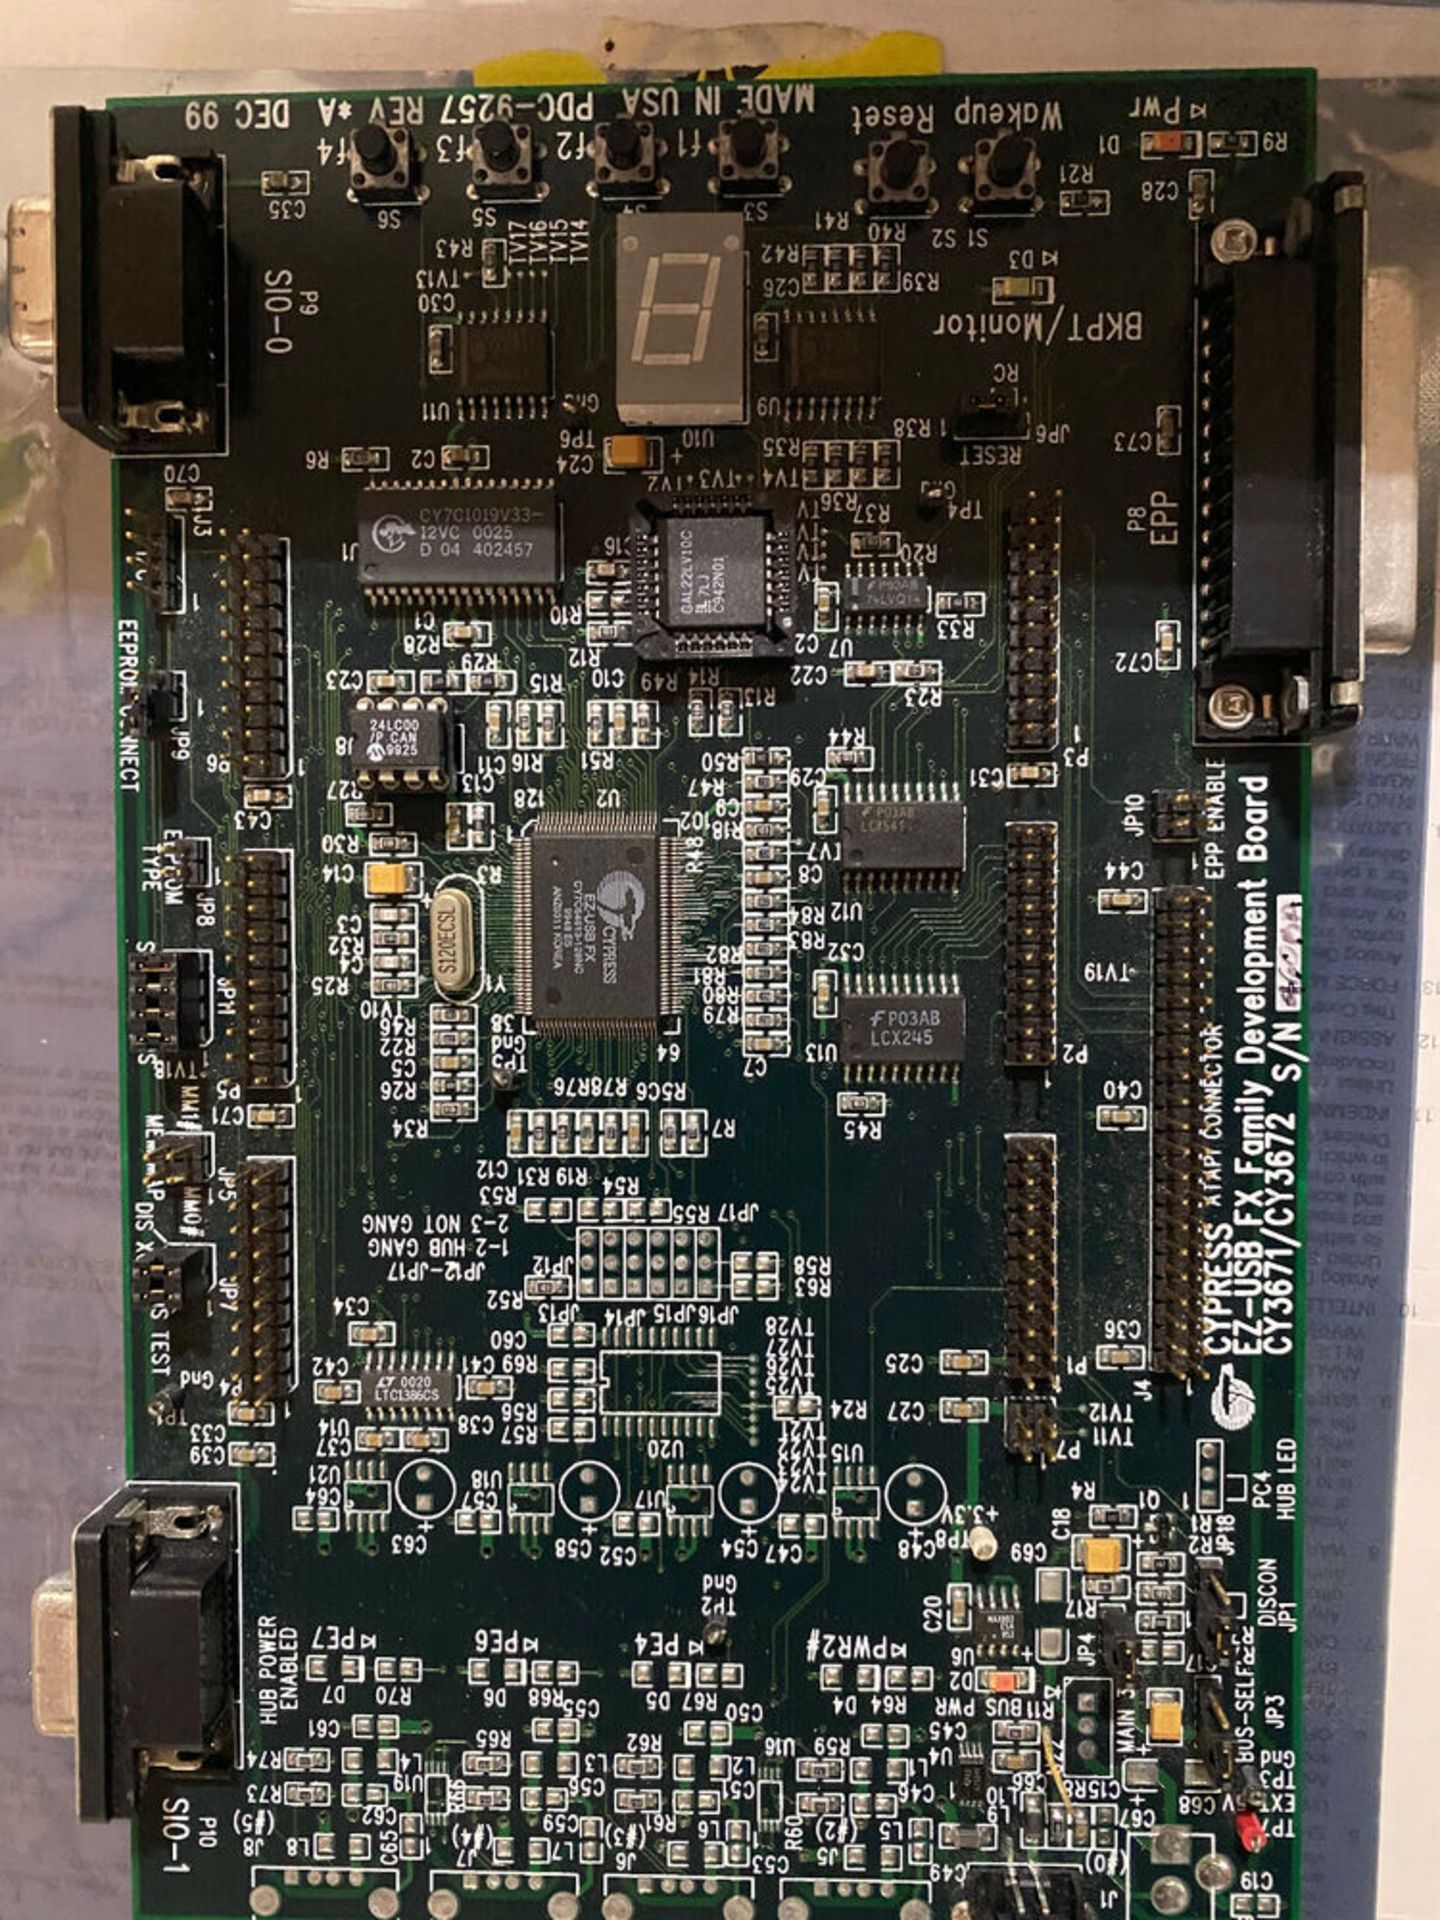 Cypress Semiconductor CY3671 Board EZ-USB FX Xcelerator Development Kit - Image 2 of 2